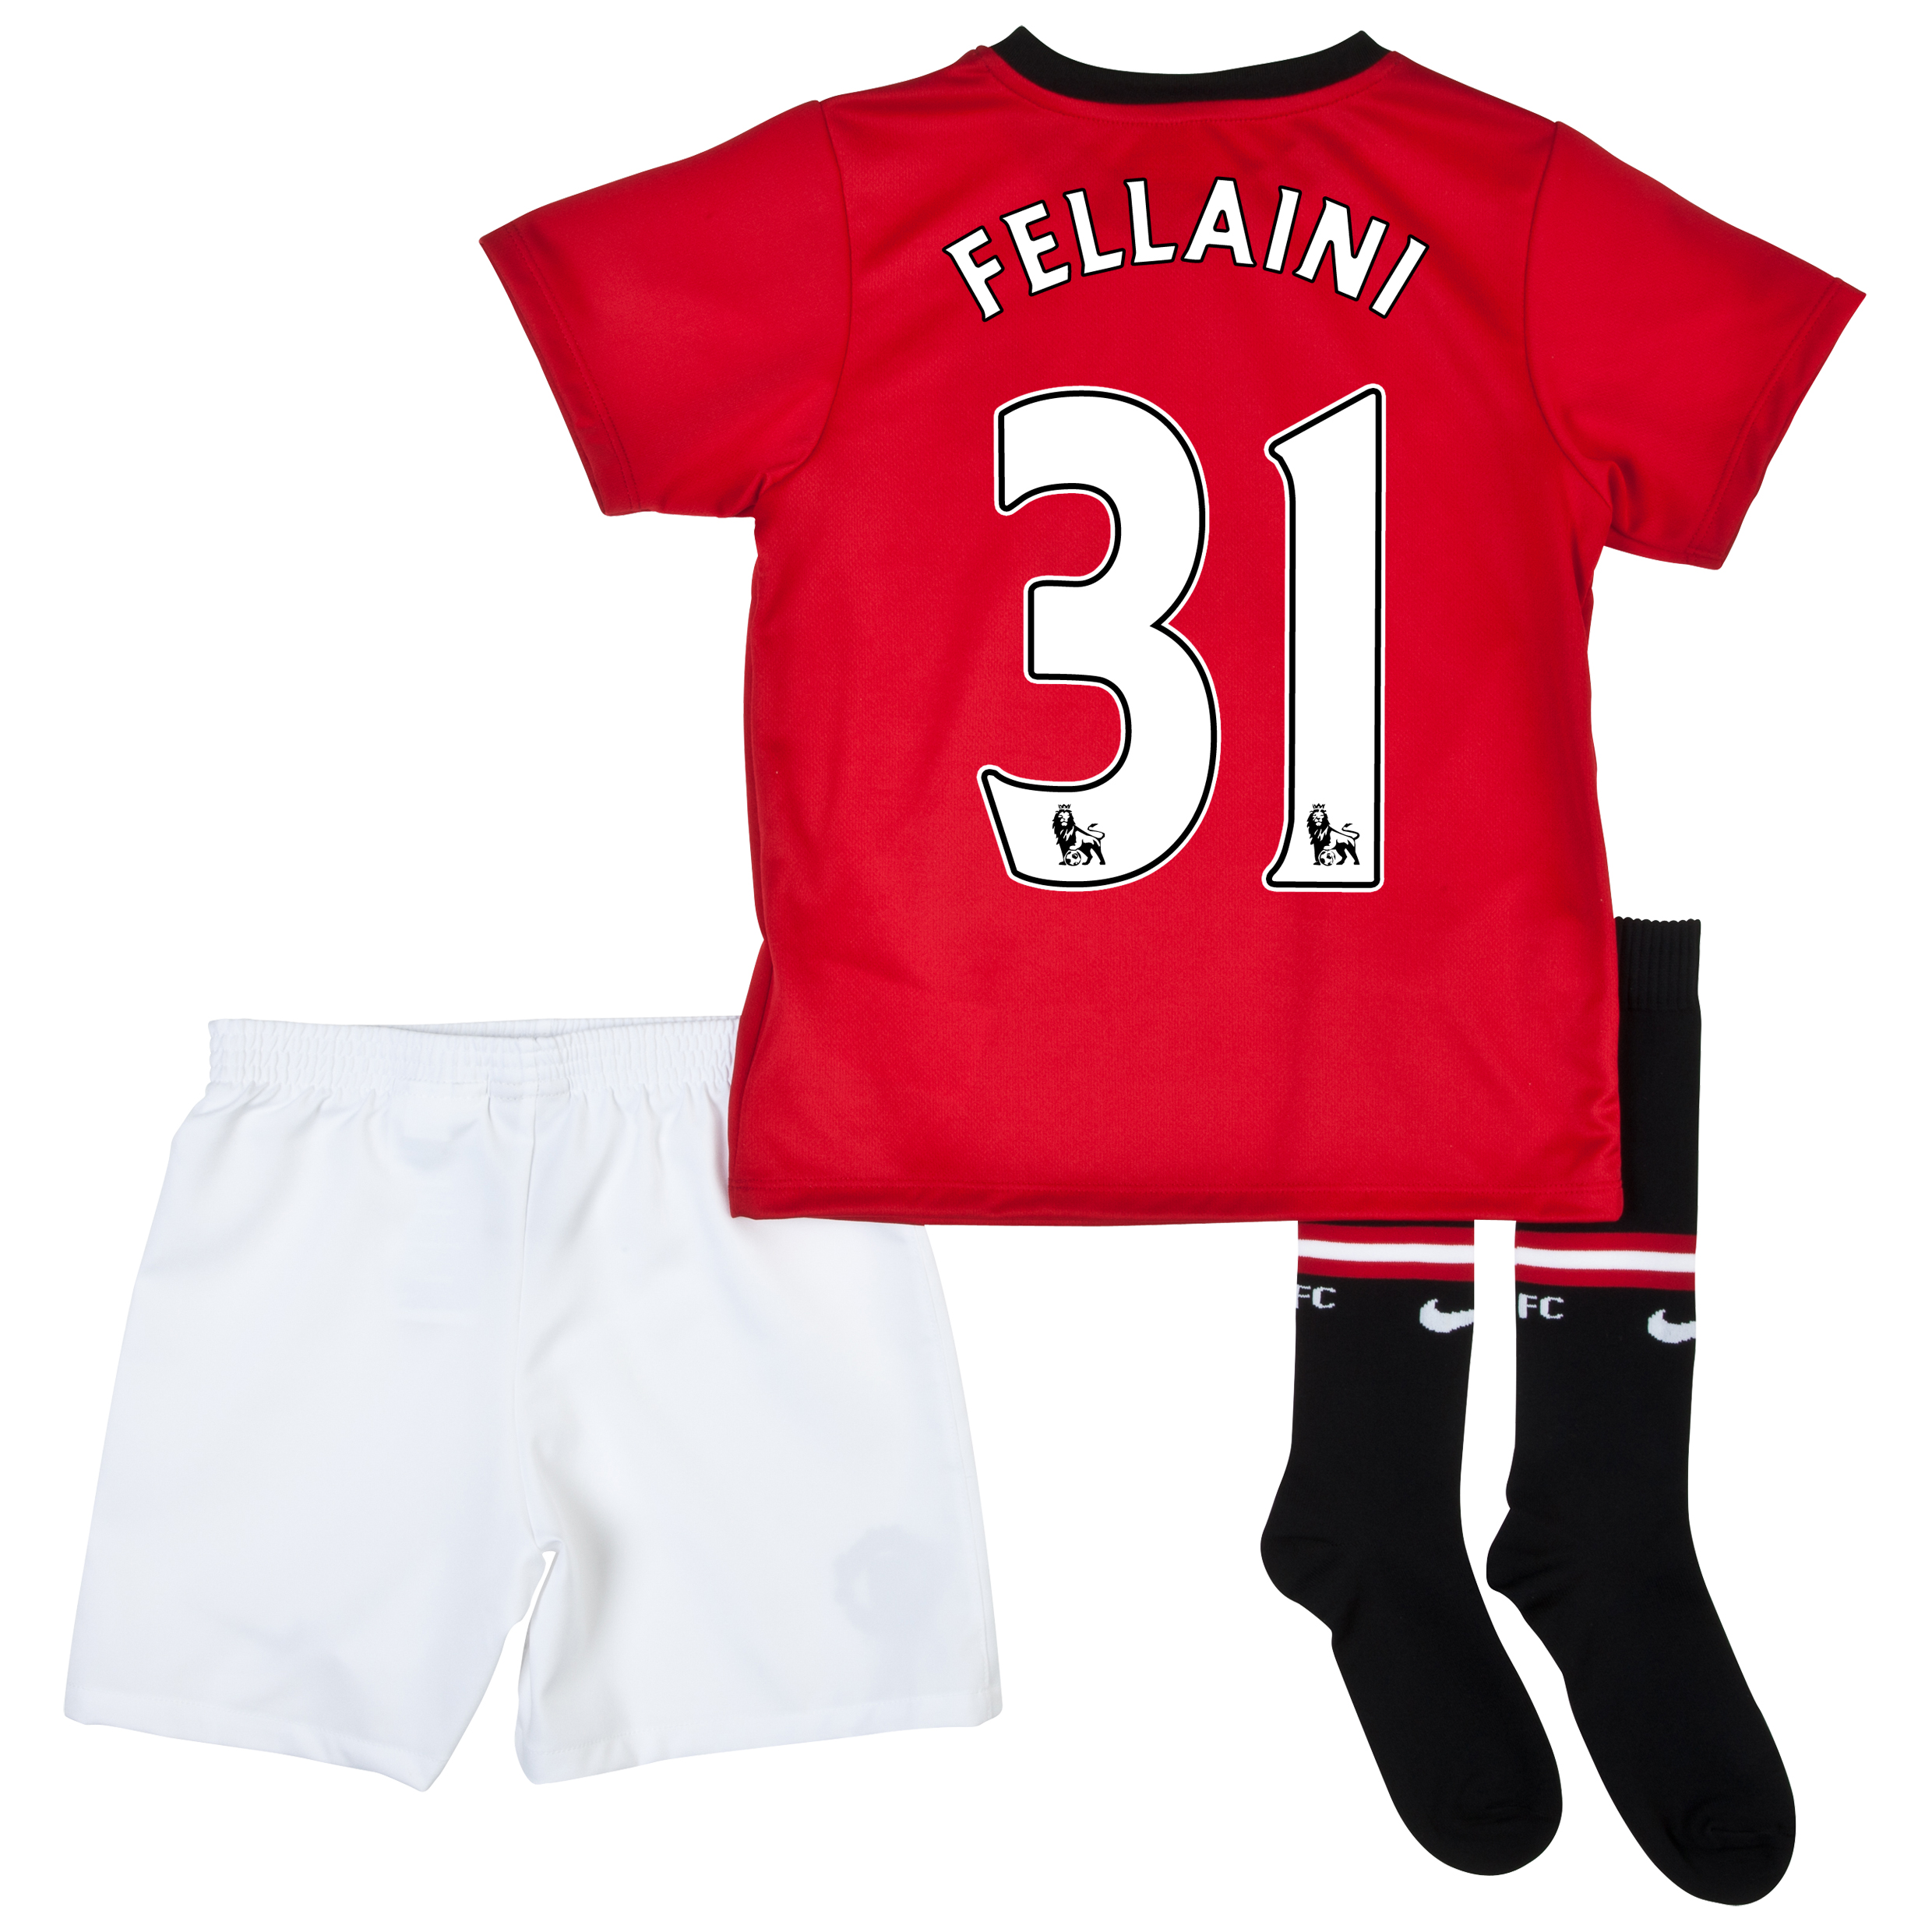 Manchester United Home Kit 2013/14 - Little Boys with Fellaini 31 printing